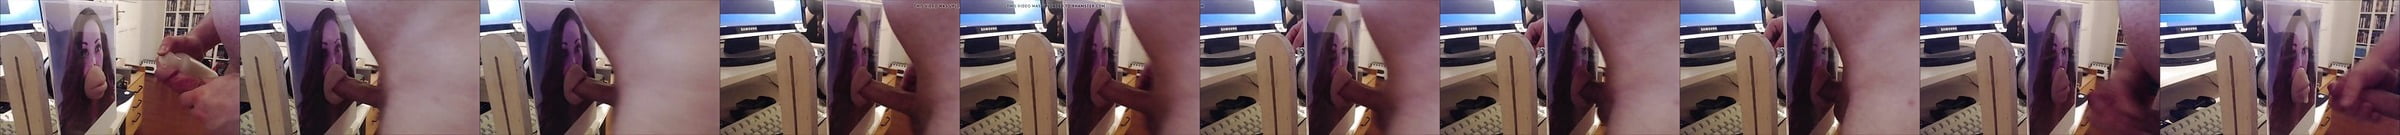 Kandice Barber Teacher Cum Tribute Free Hd Videos Porn Bd